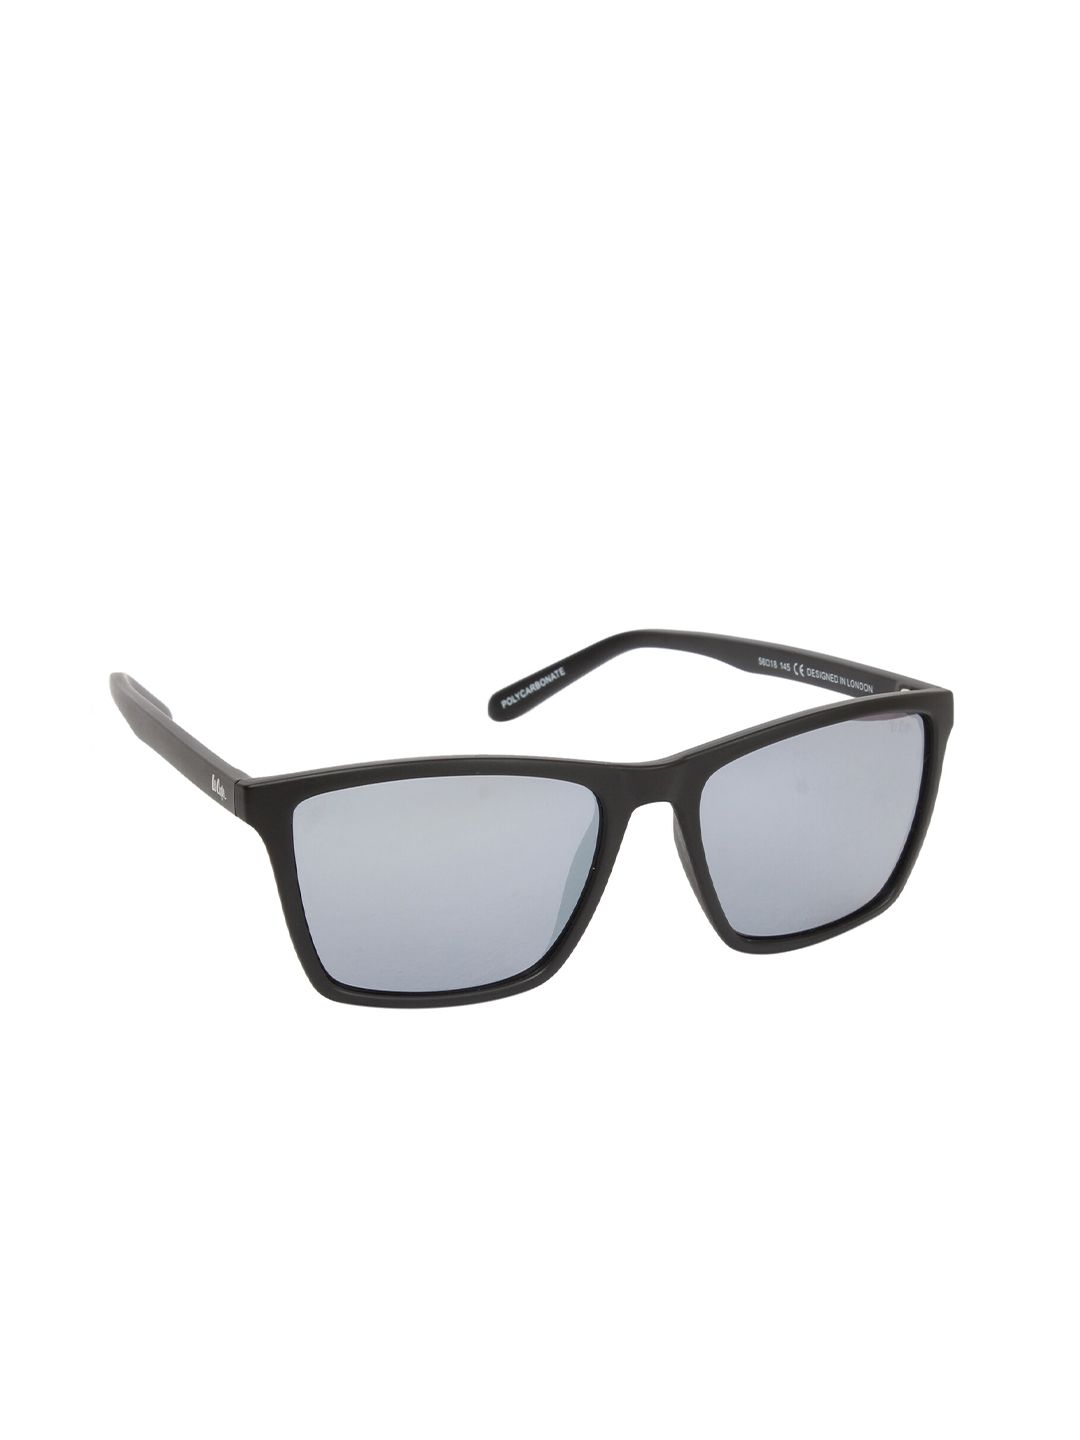 Lee Cooper Unisex Mirrored Lens & Black Square Sunglasses LC9156NTB Price in India